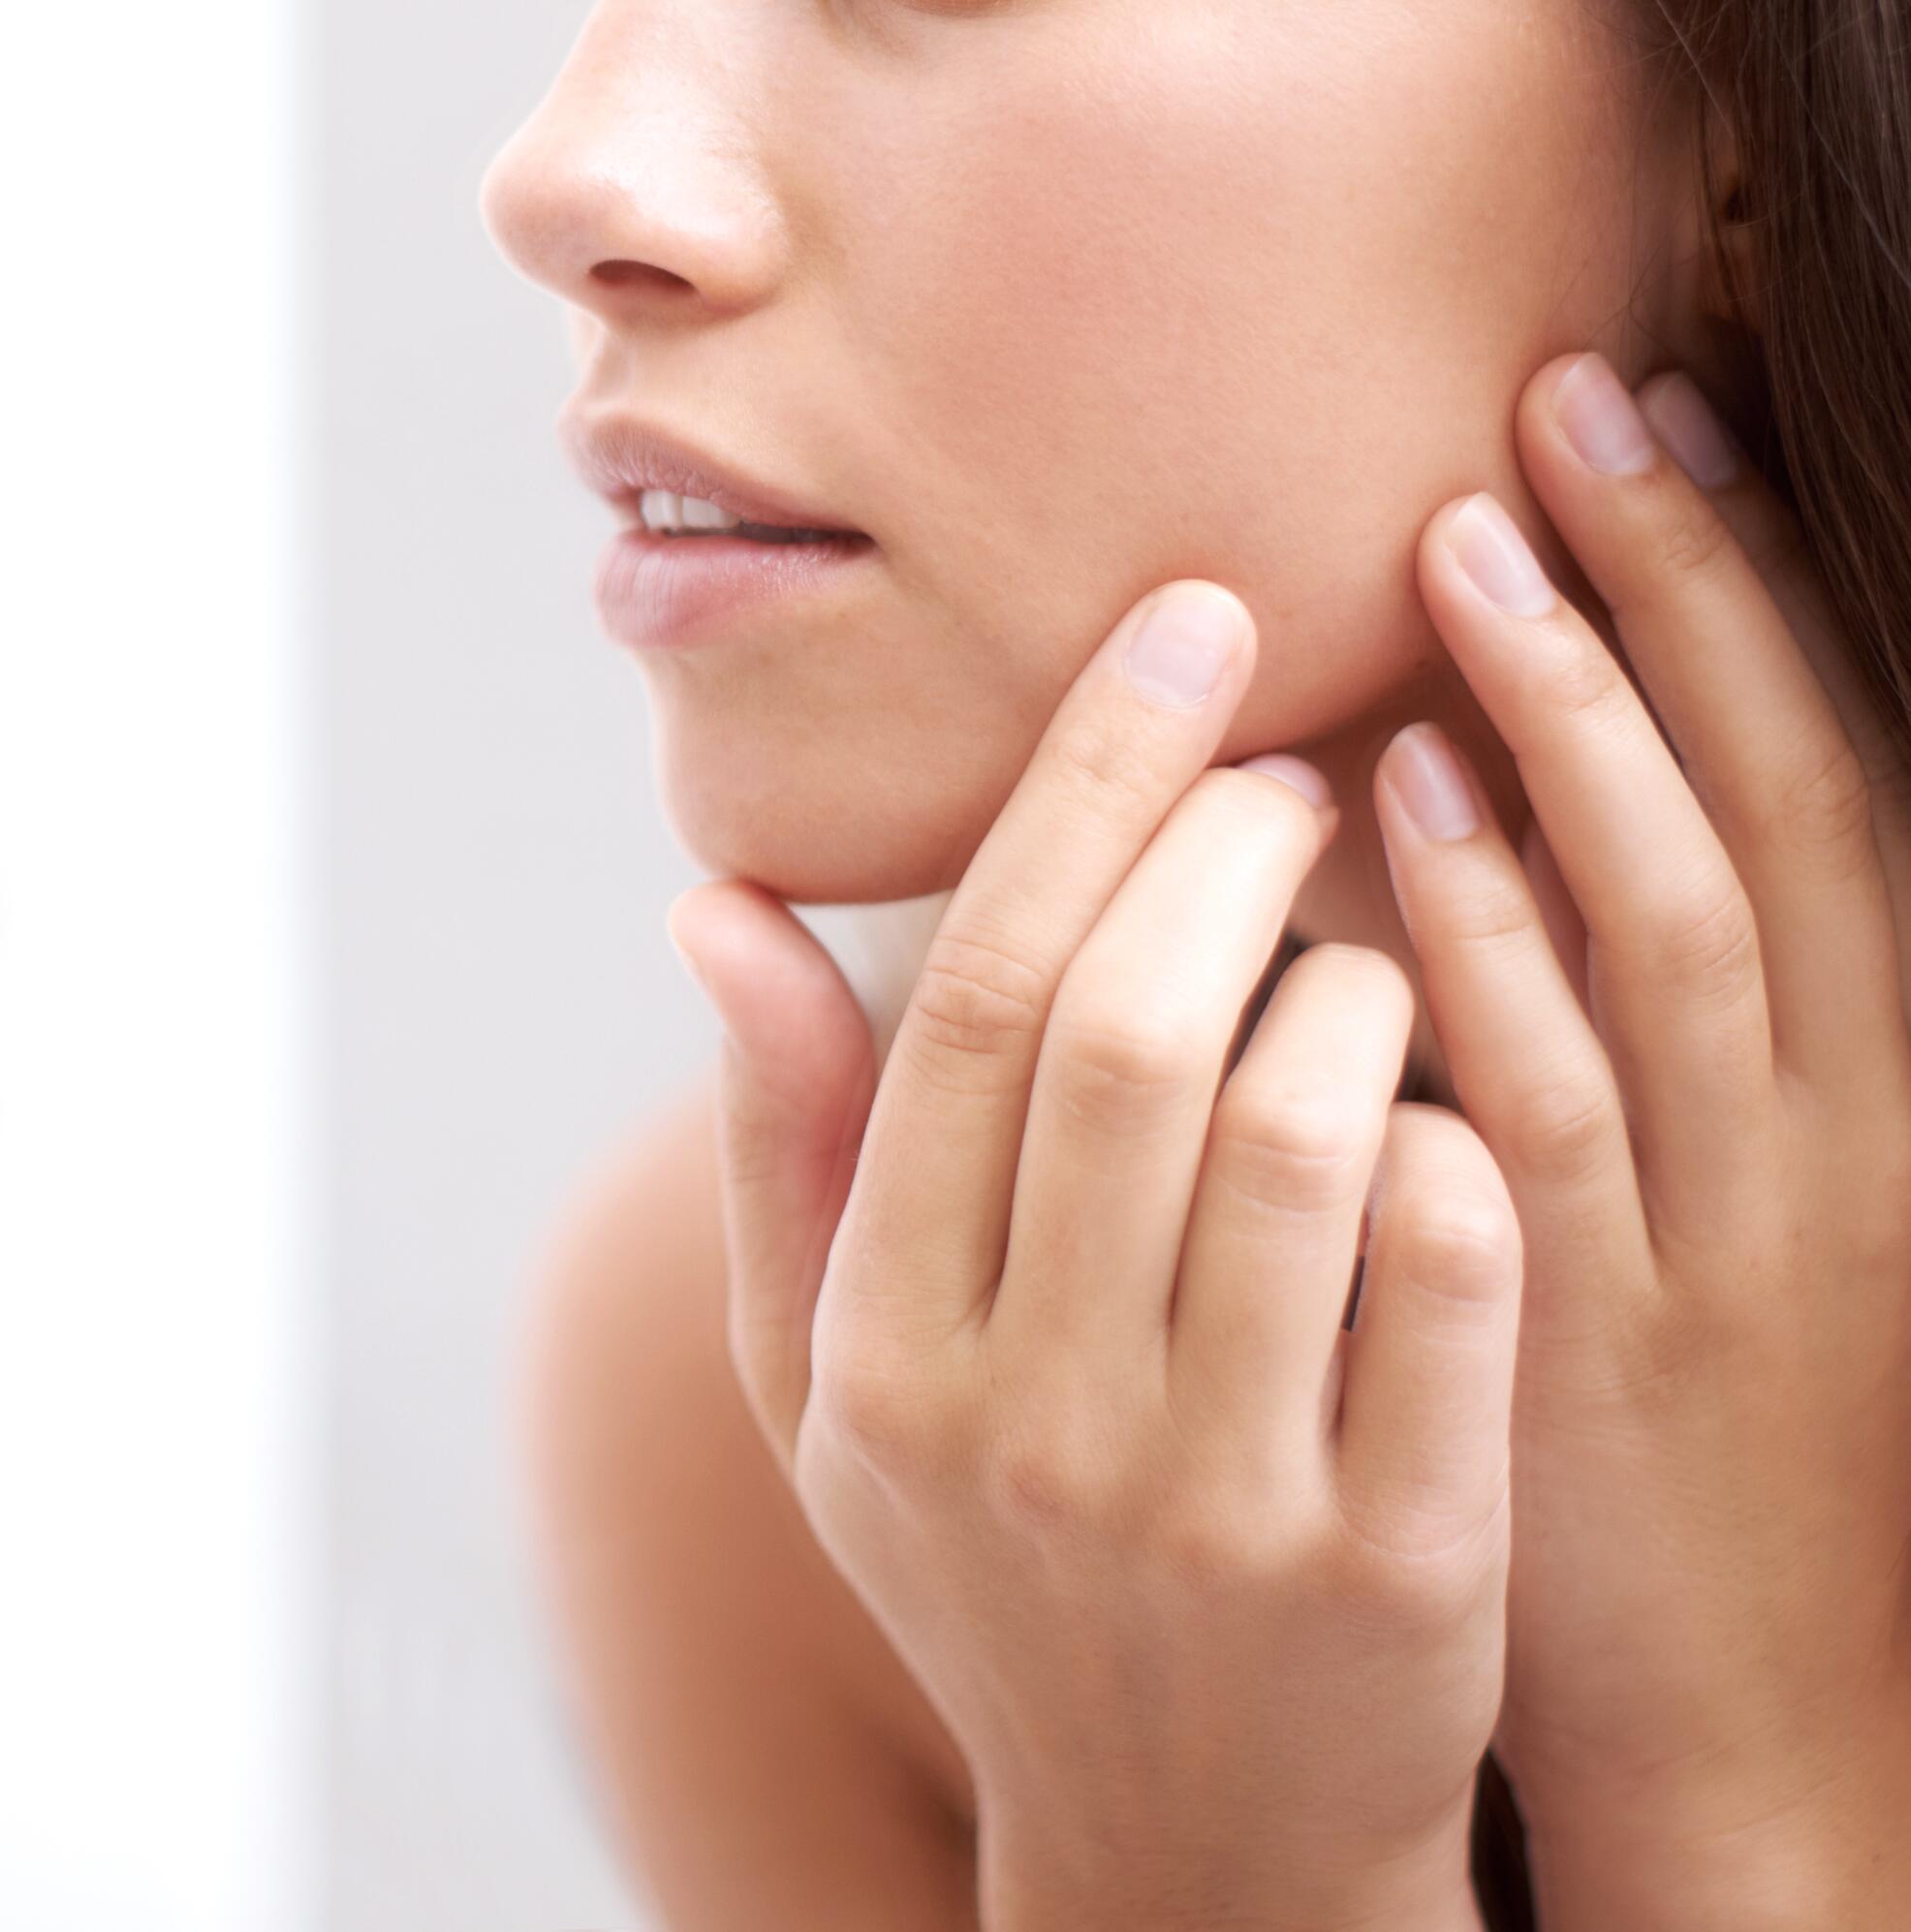 Inflammatory acne